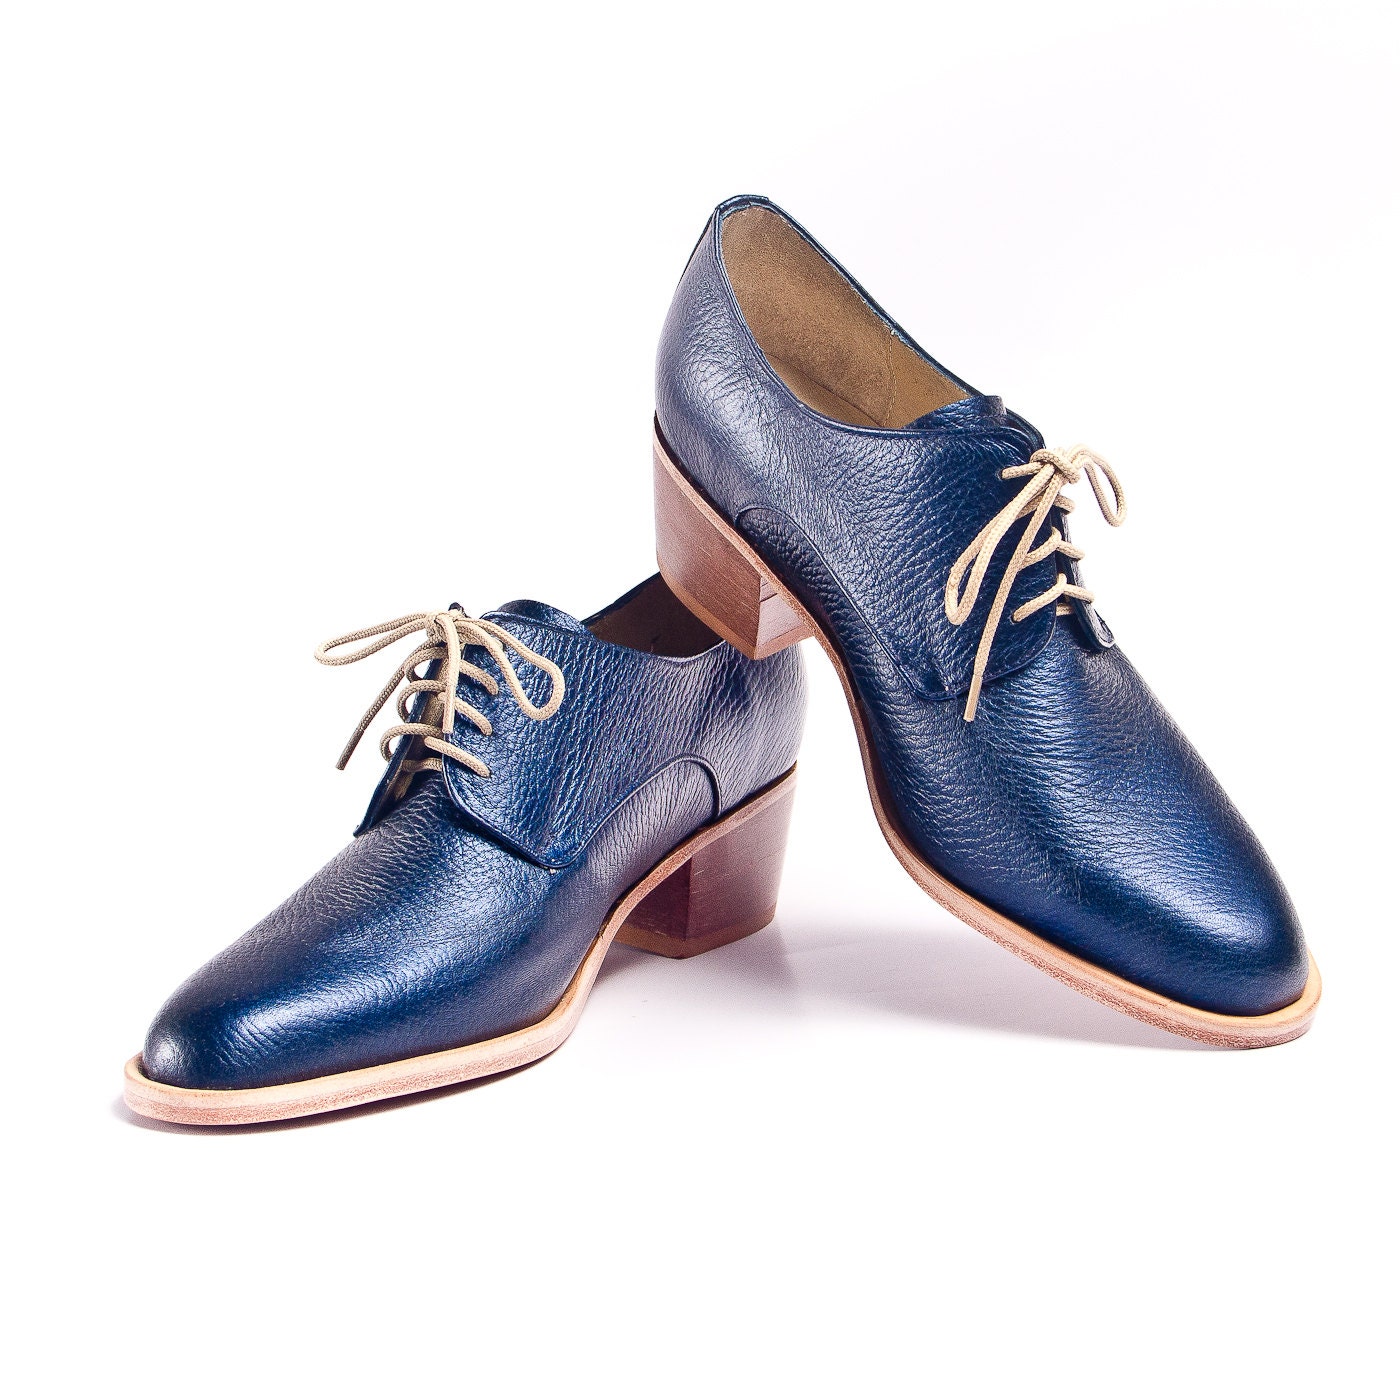 metallic blue derby oxford brogue shoes with cuban heel - FREE WORLDWIDE SHIPPING - goodbyefolk